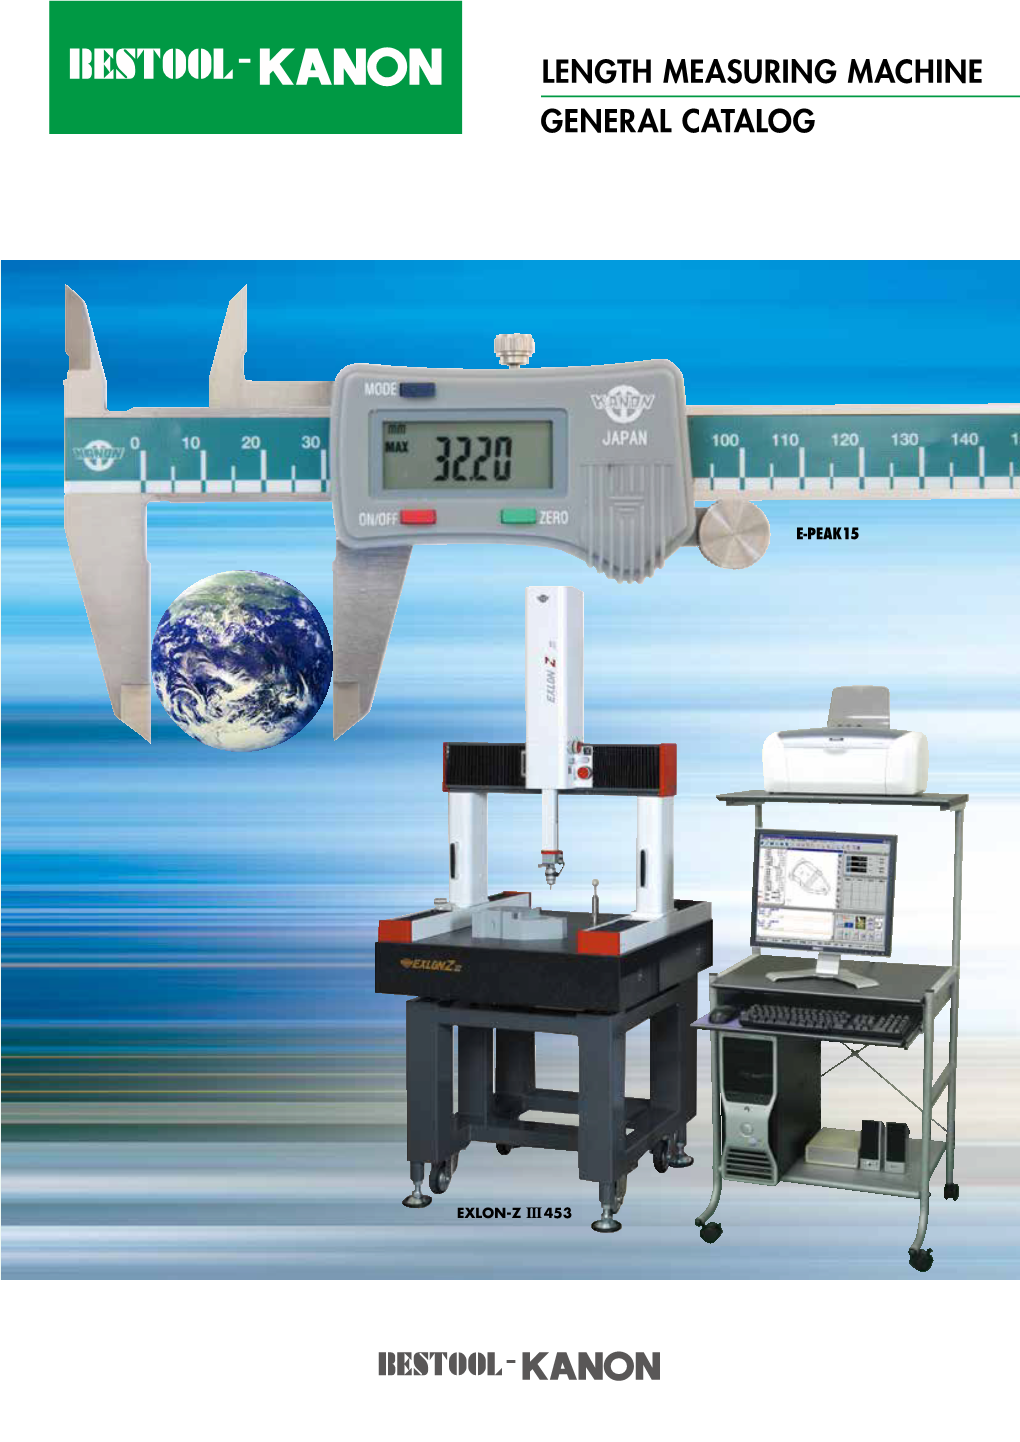 Length Measuring Machine General Catalog